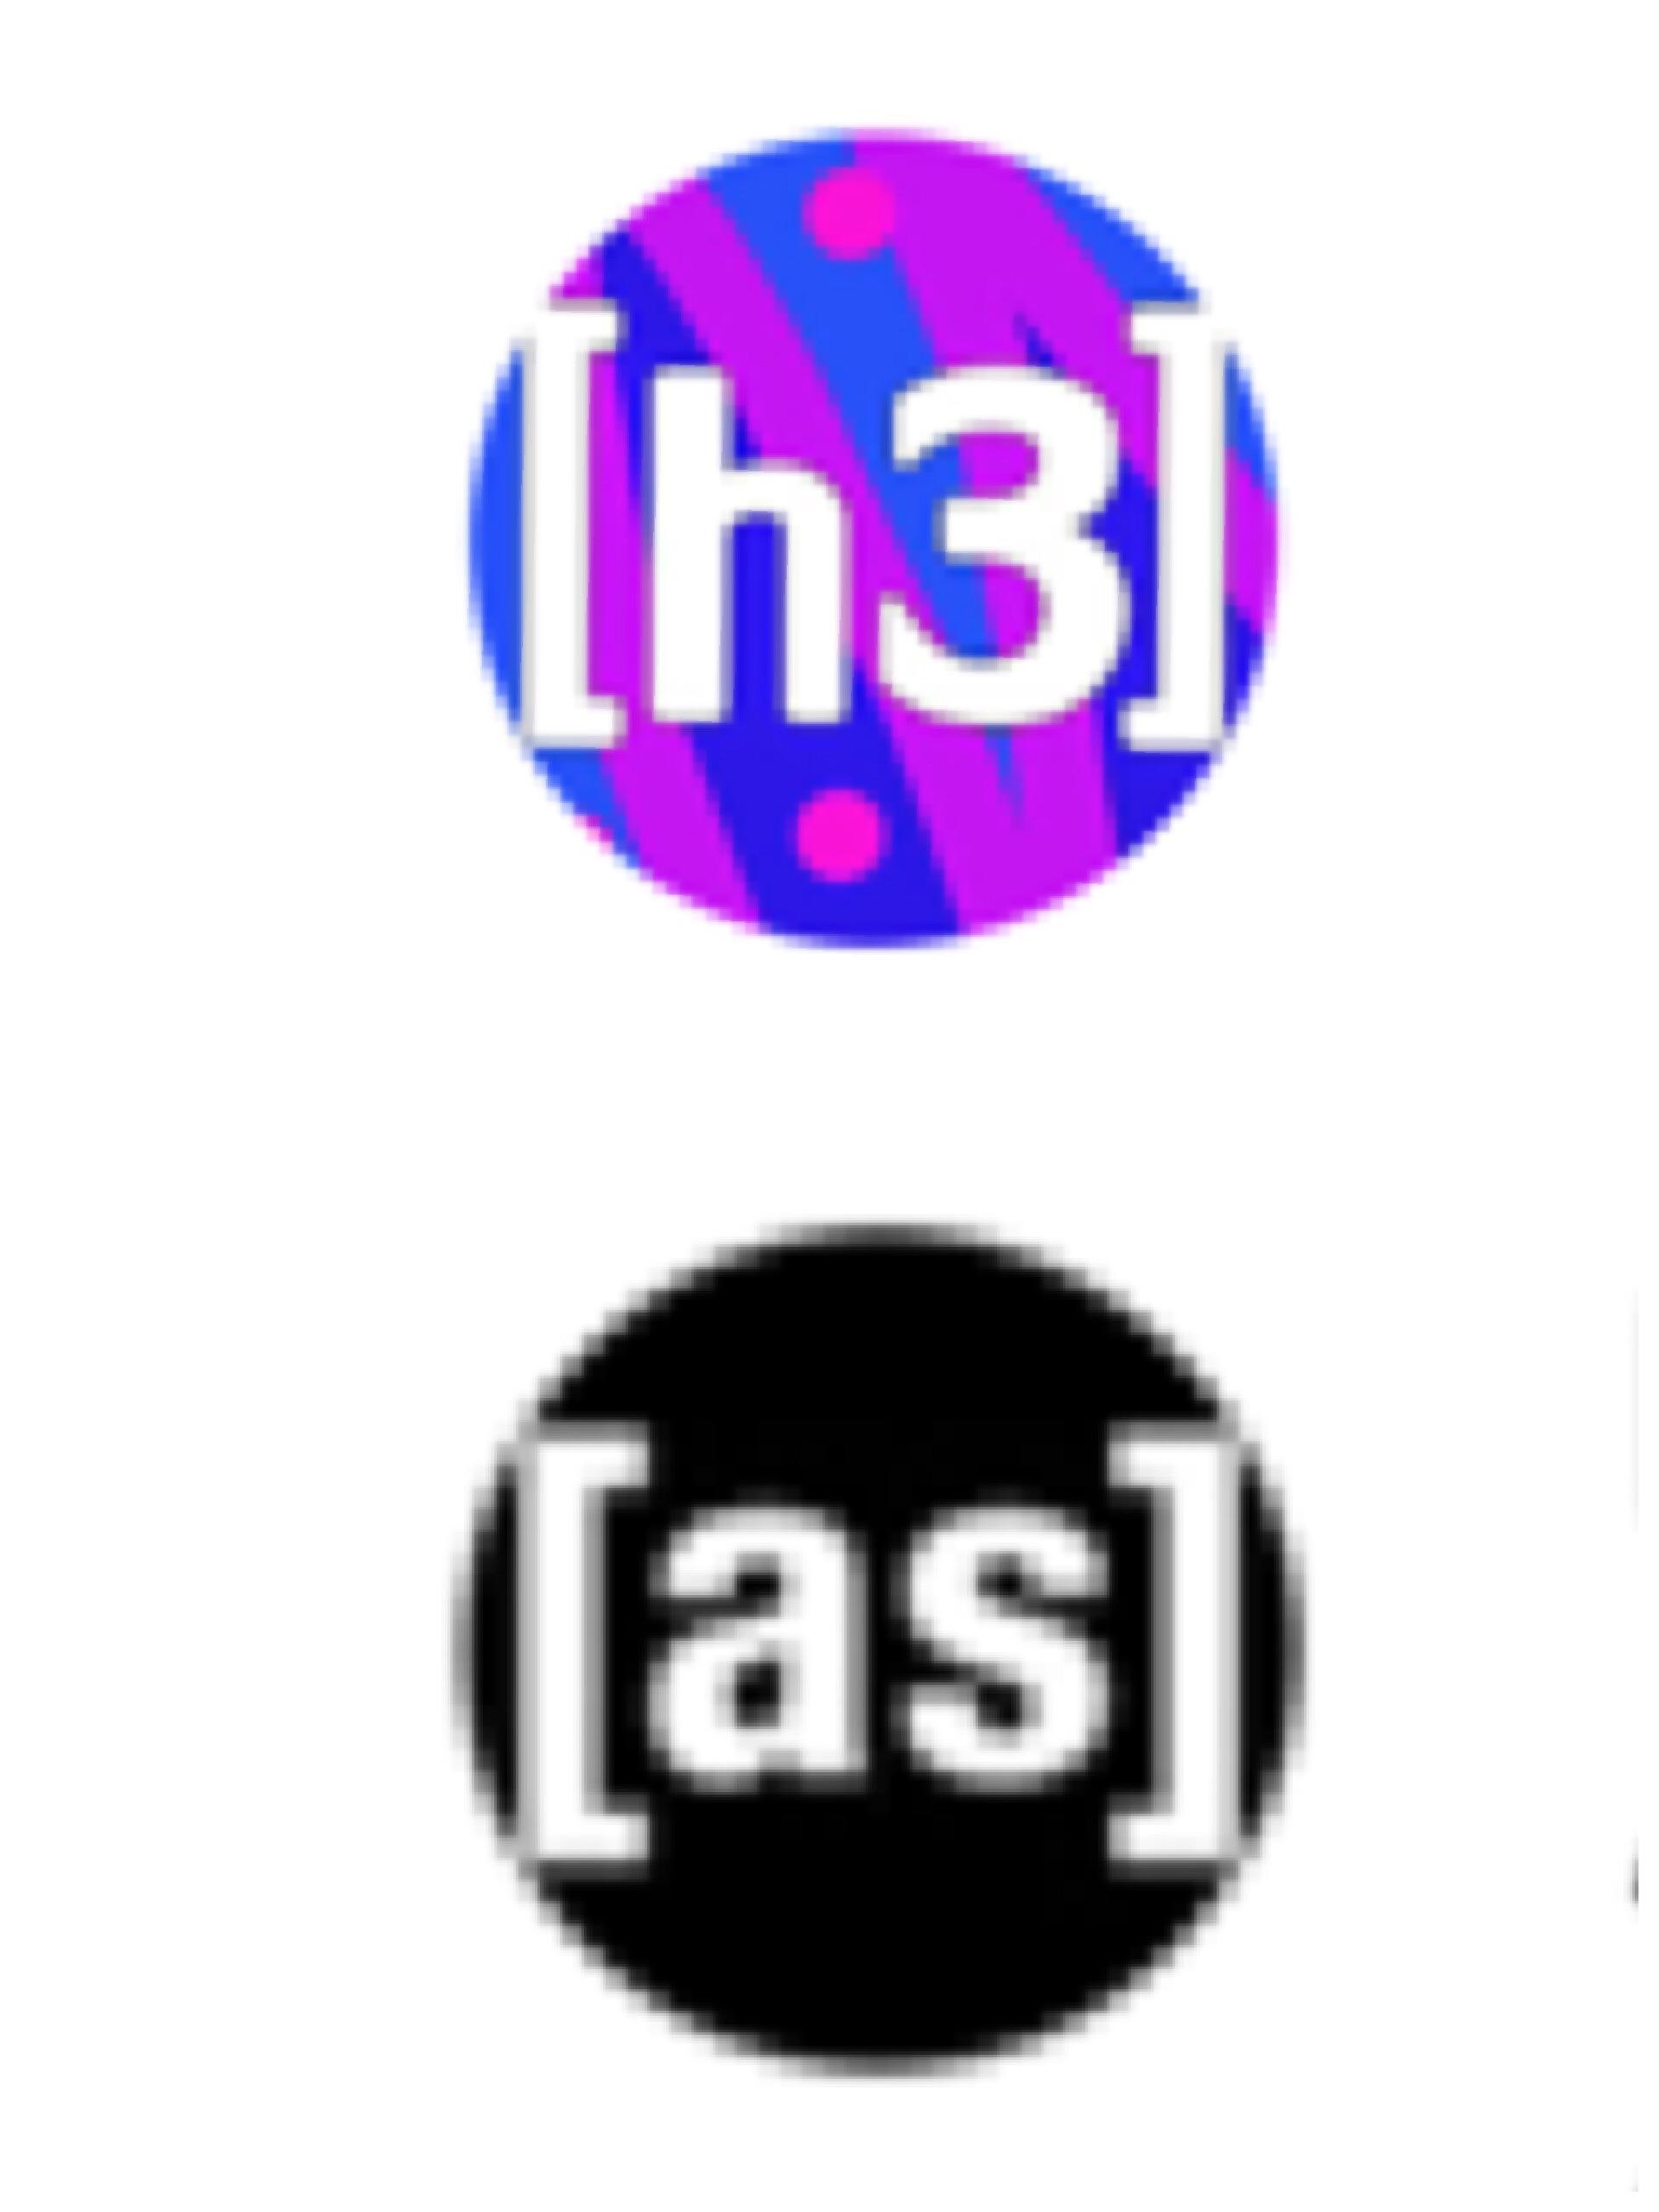 Adult Swim Logo - Anyone noticed h3h3 and adultswim have similar logos?